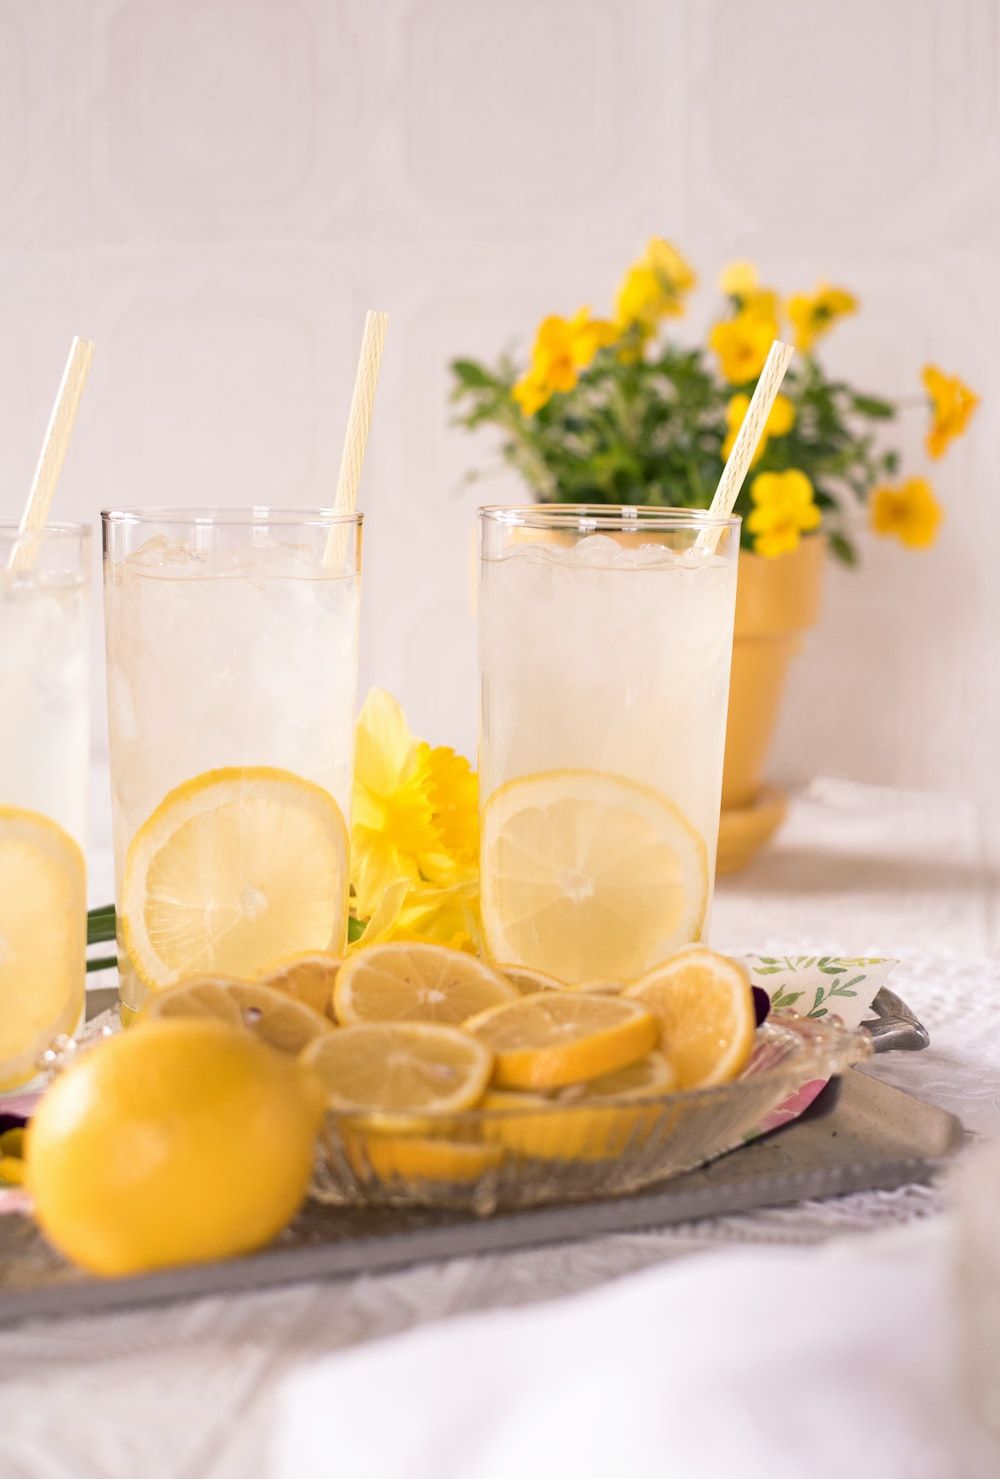 Lemon Drink Picture. Download Free Image